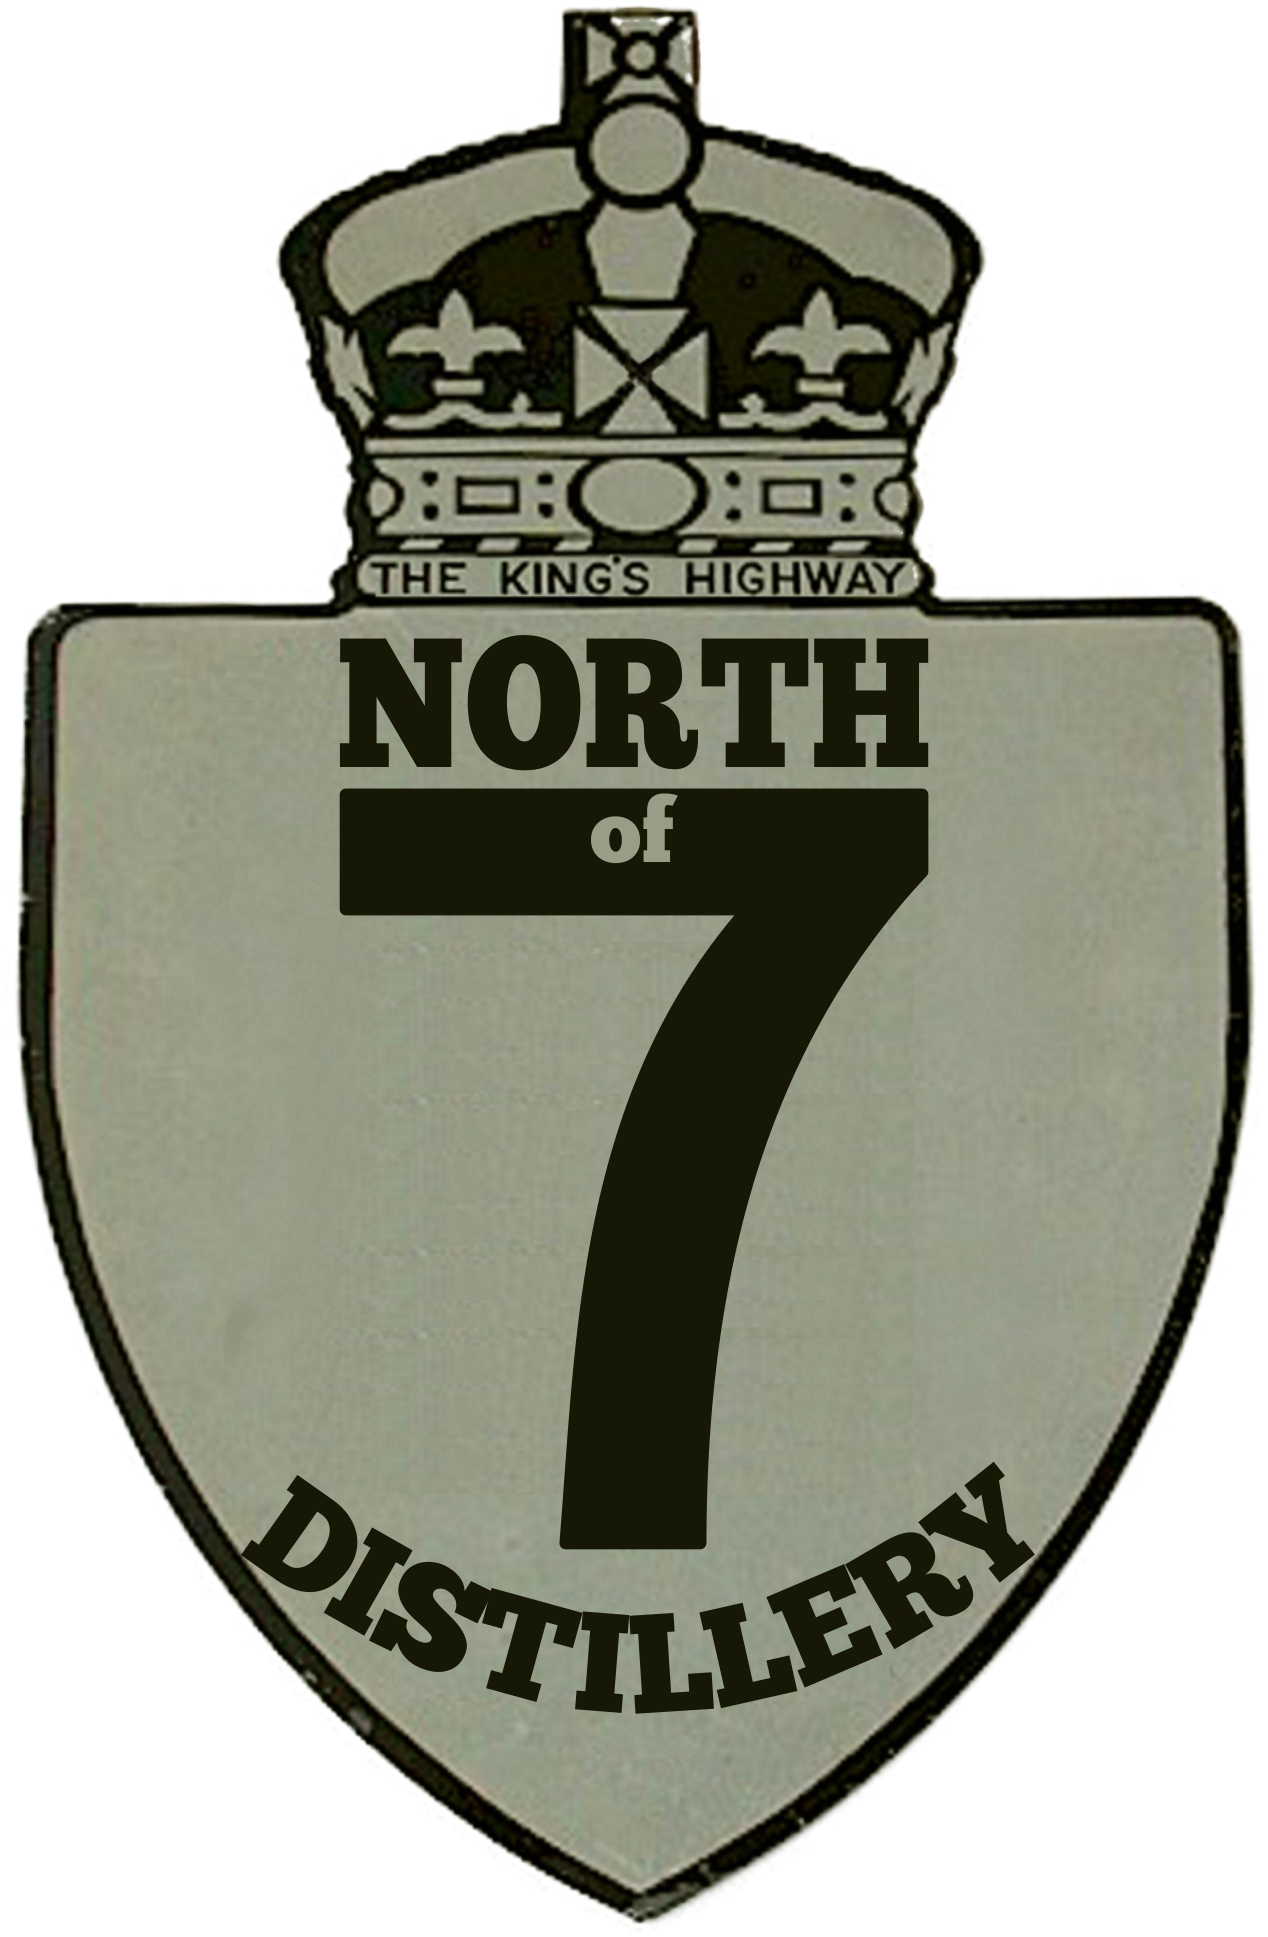 North of 7 Distillery